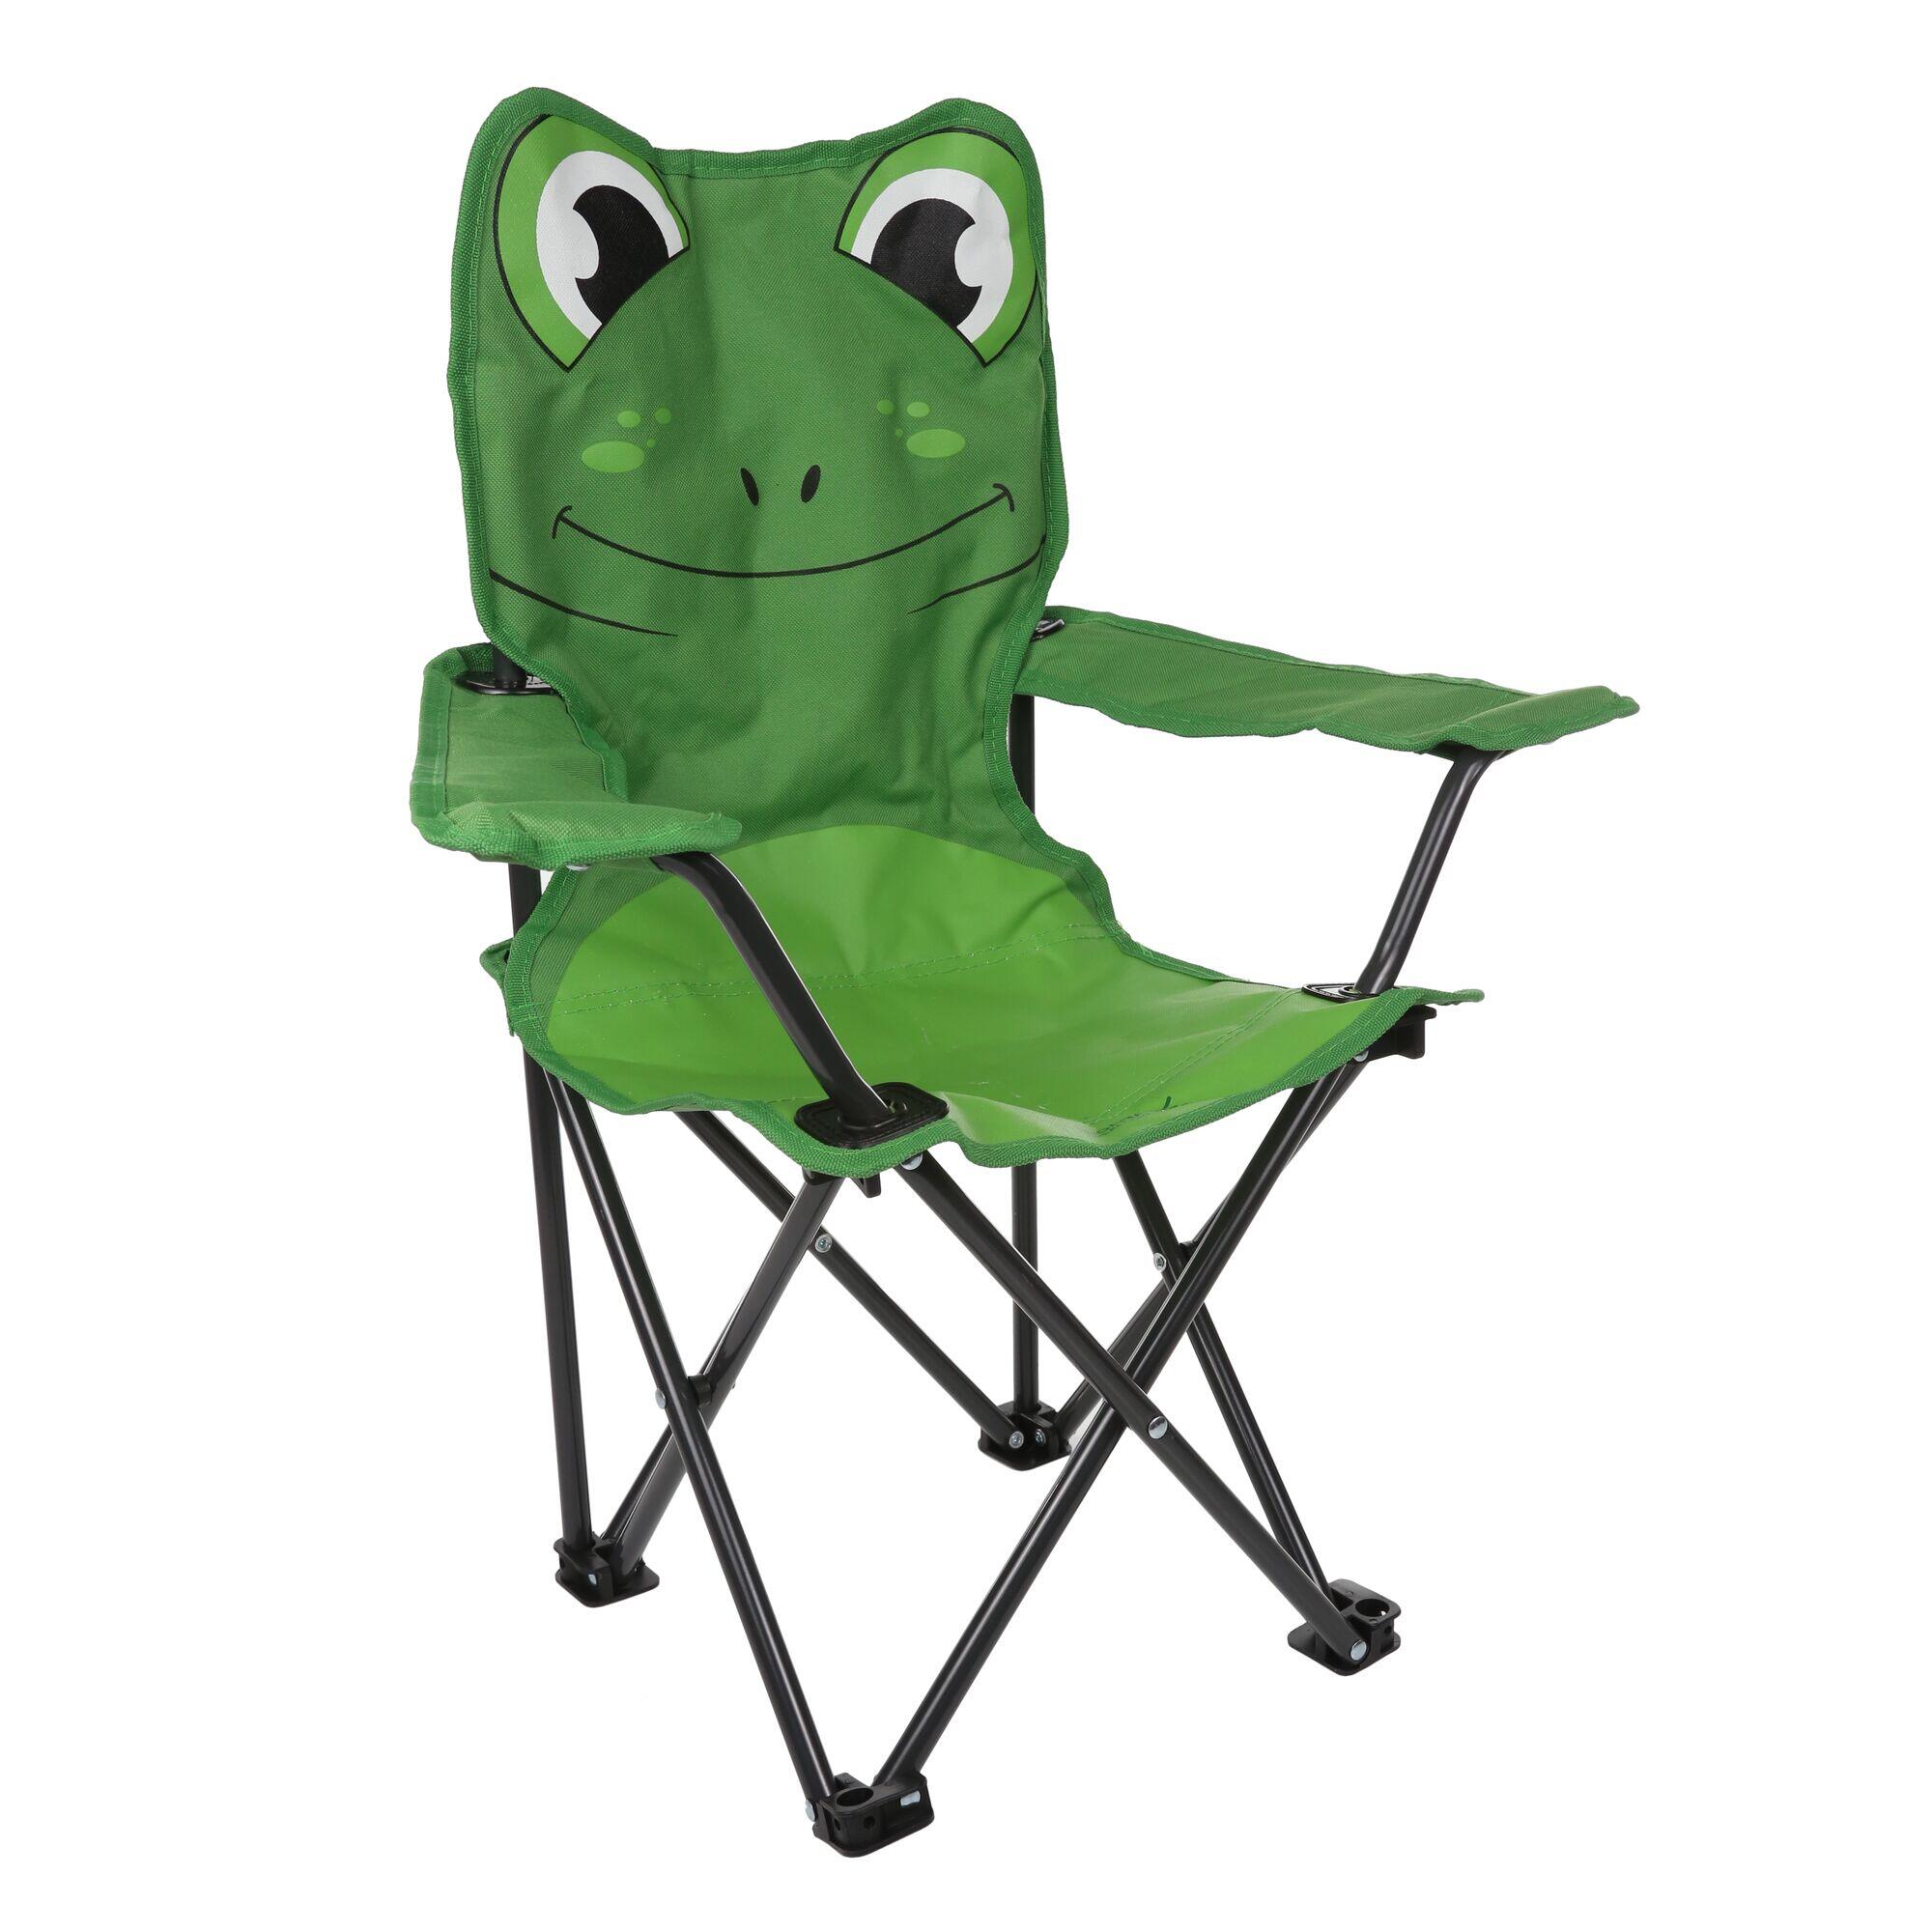 Animal Kids' Camping Chair - Green Frog 3/5